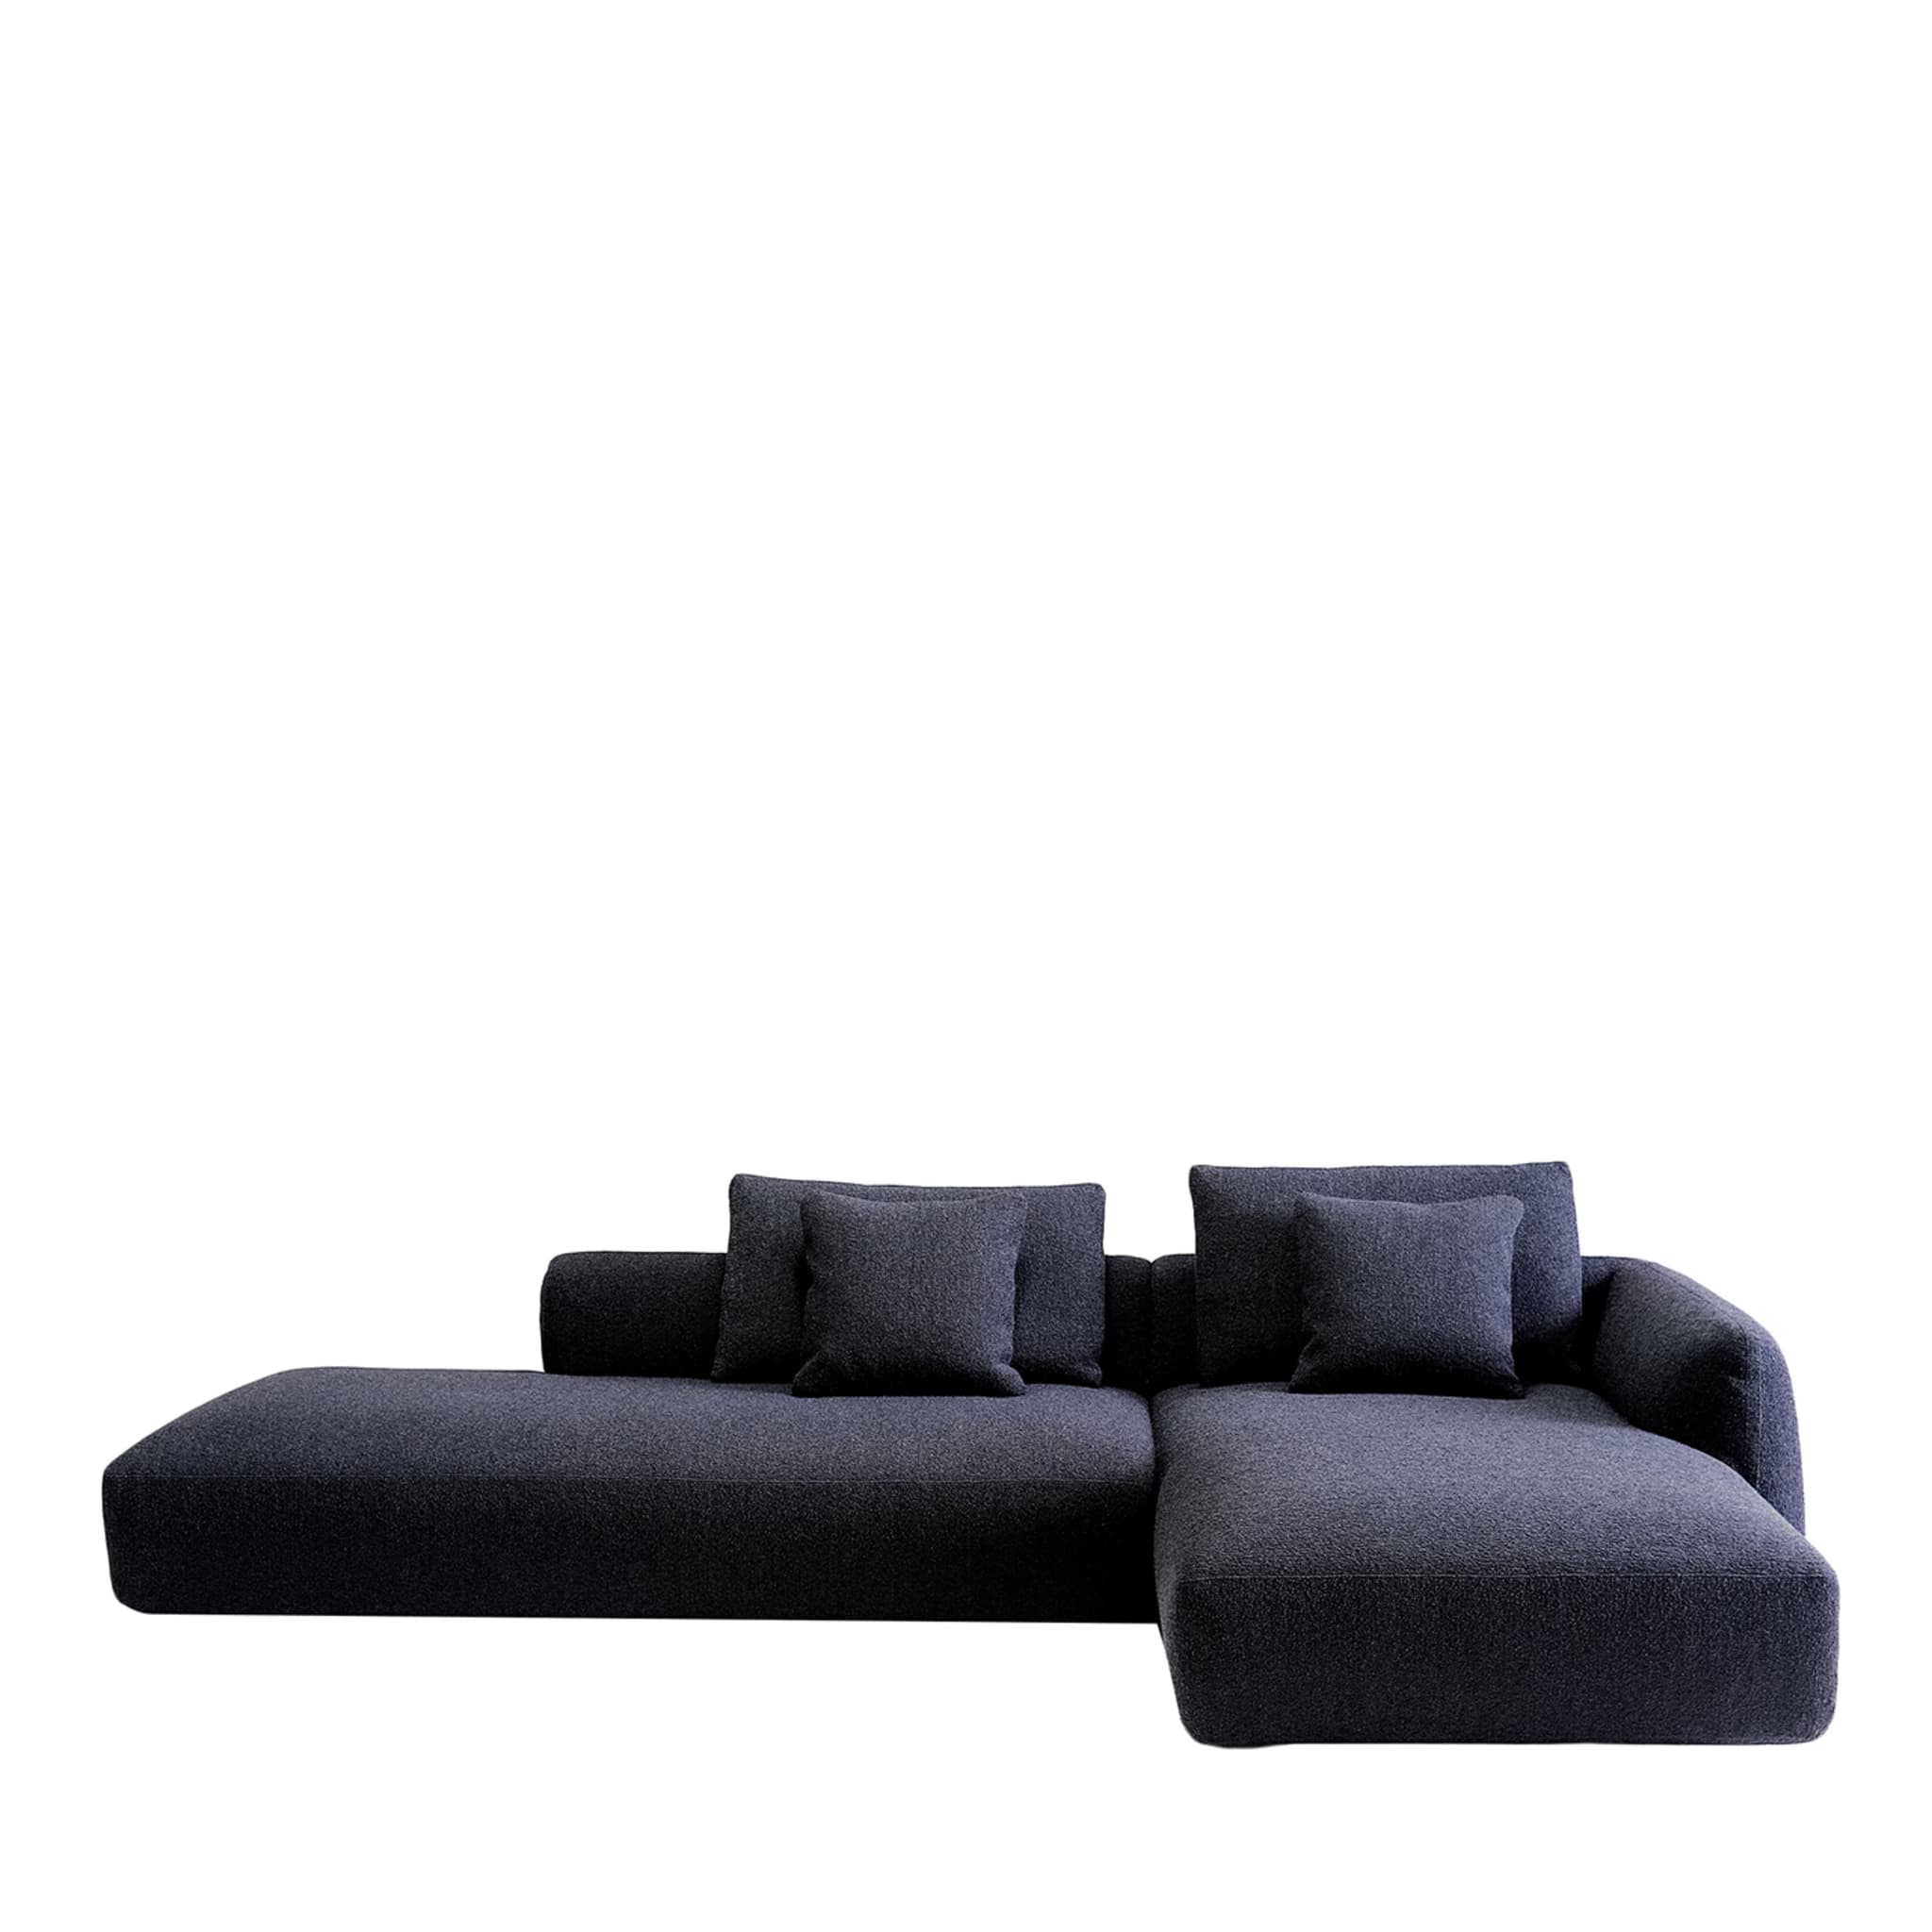 Naxos L-shaped Modular Blue Sofa by Ludovica + Roberto Palomba - Main view